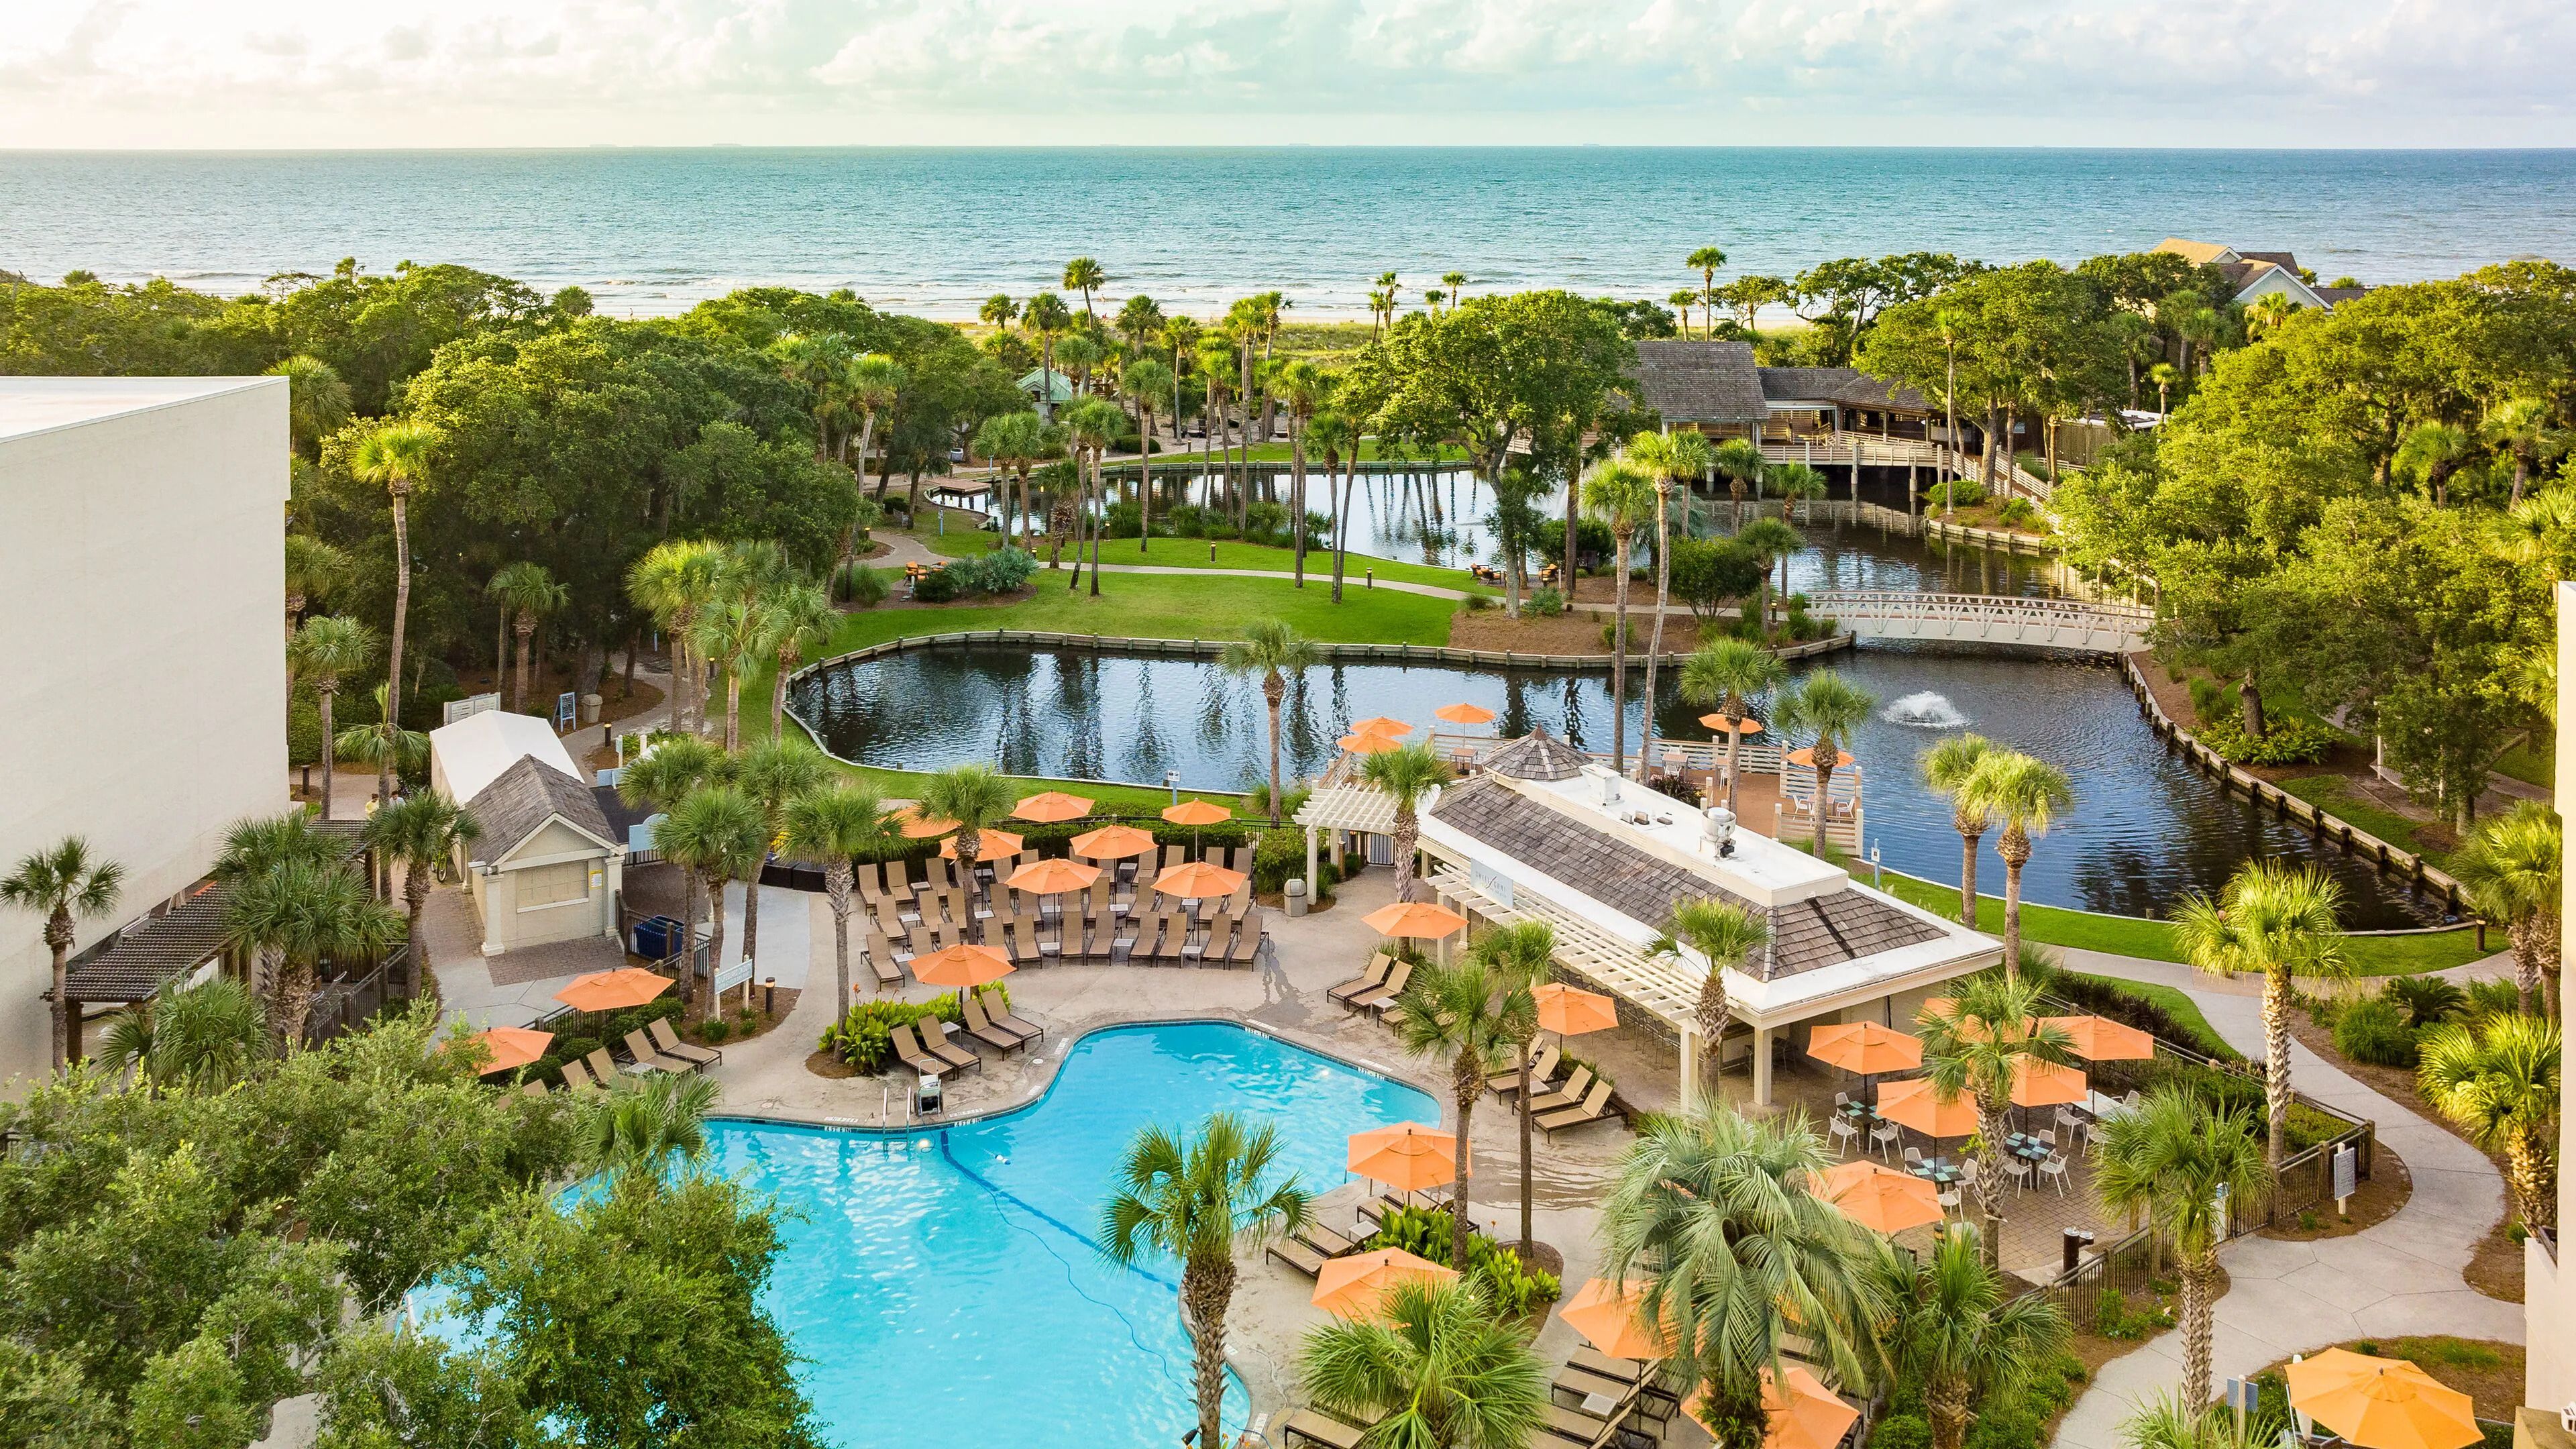 Pool view of Sonesta Resort Hilton Head Island